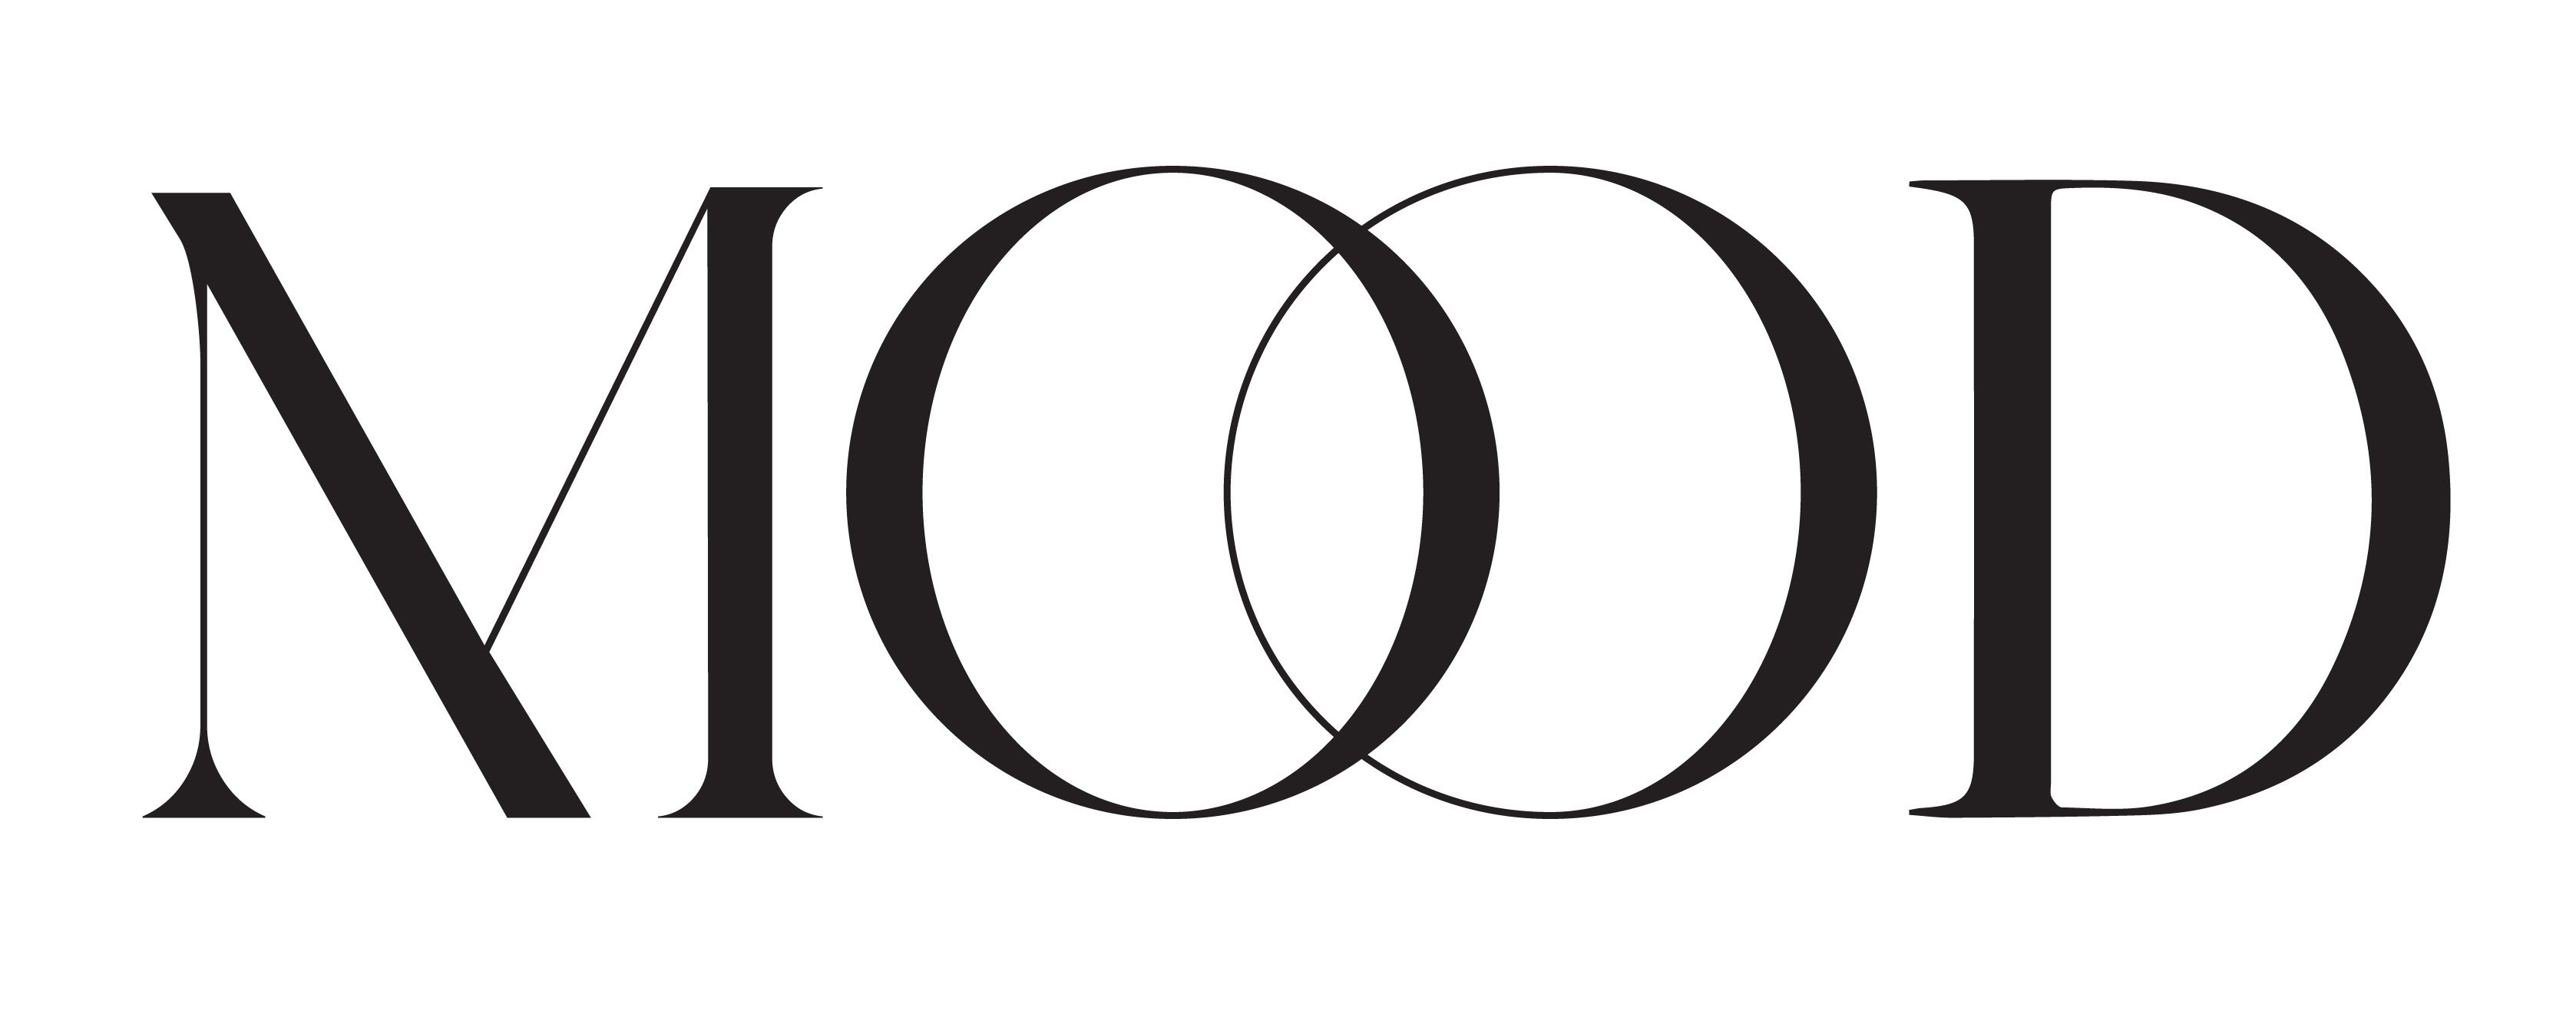 Trademark Logo MOOD